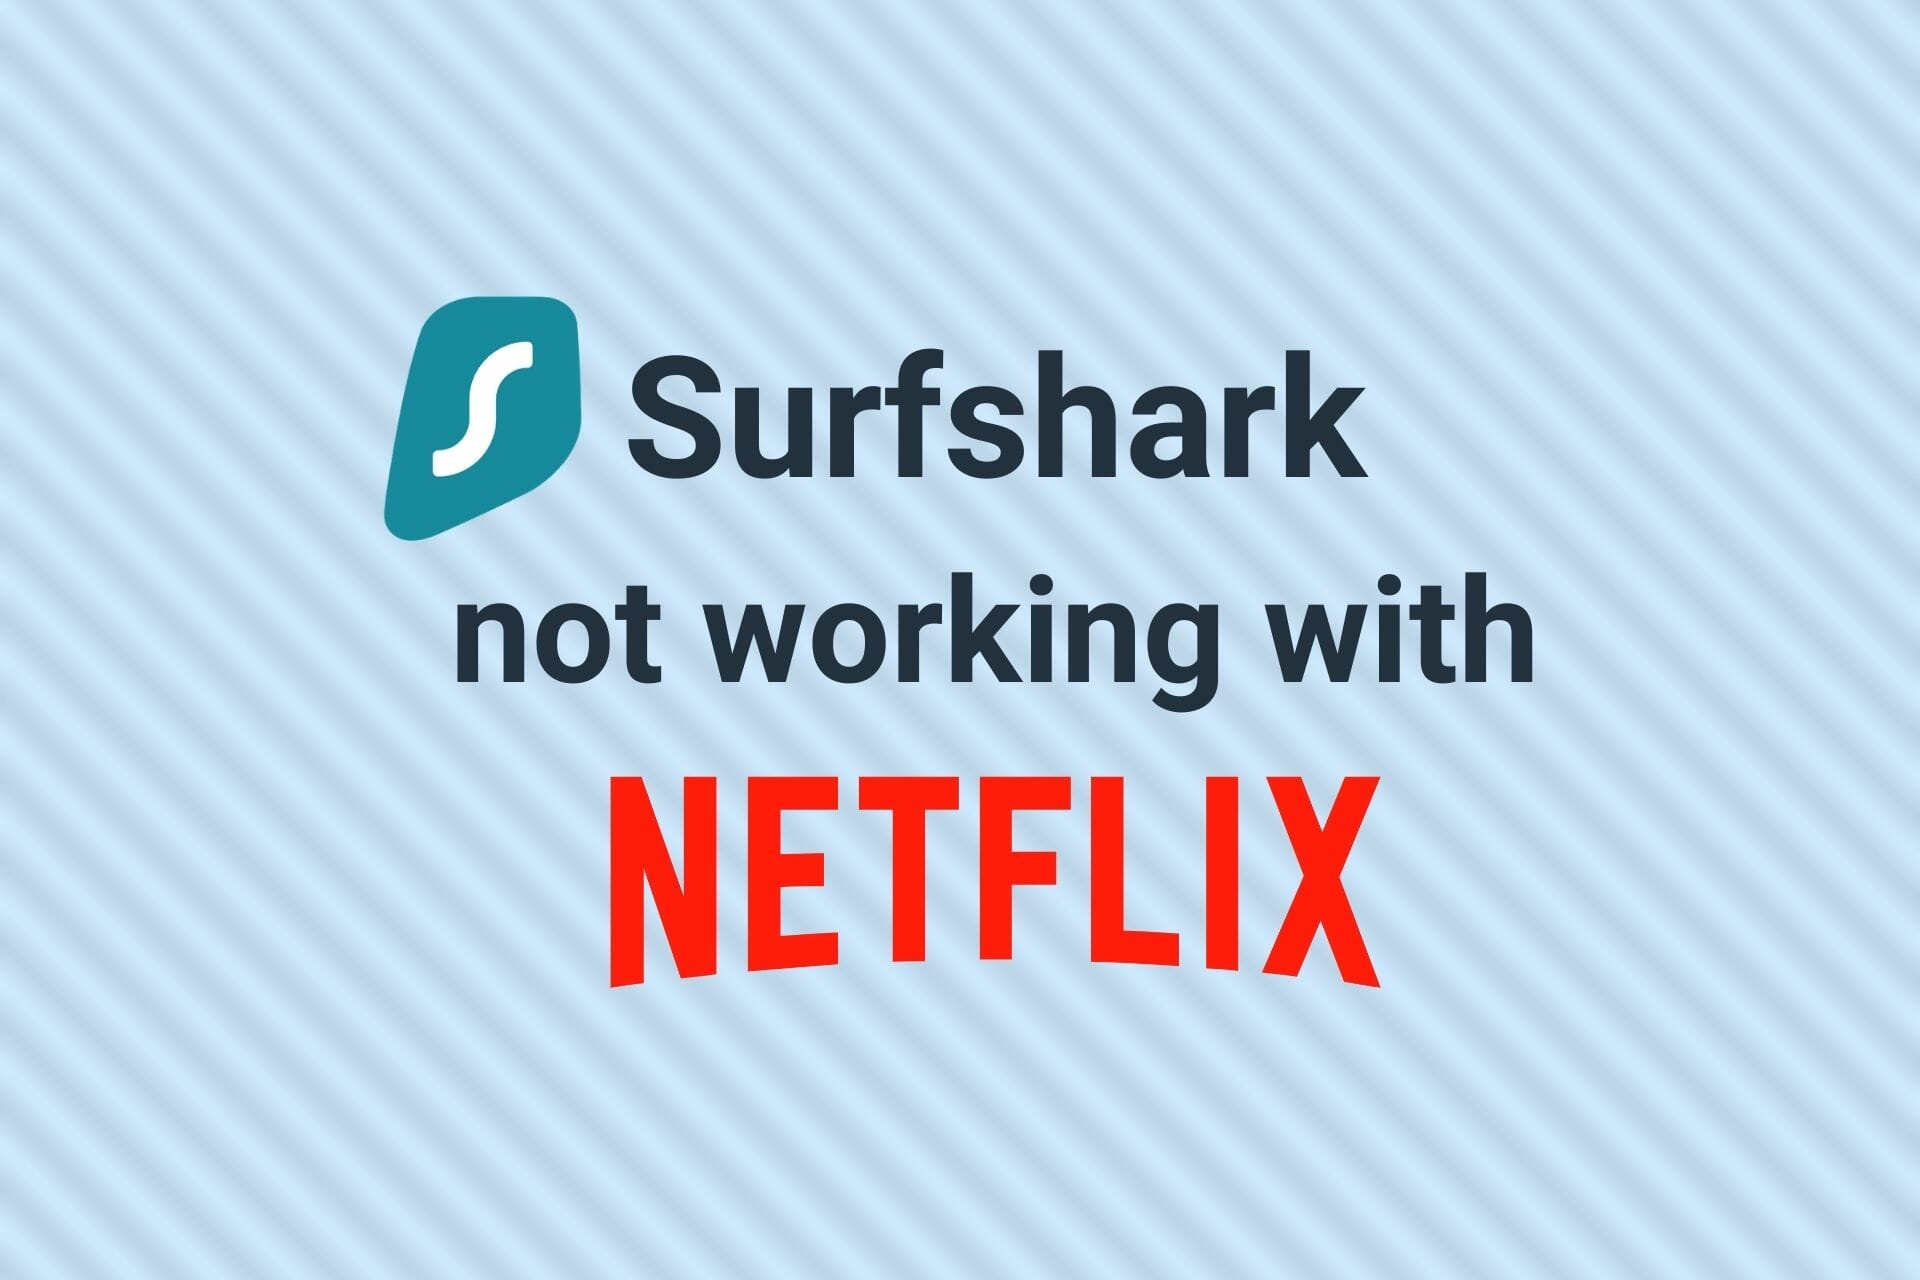 Surfshark not working with Netflix